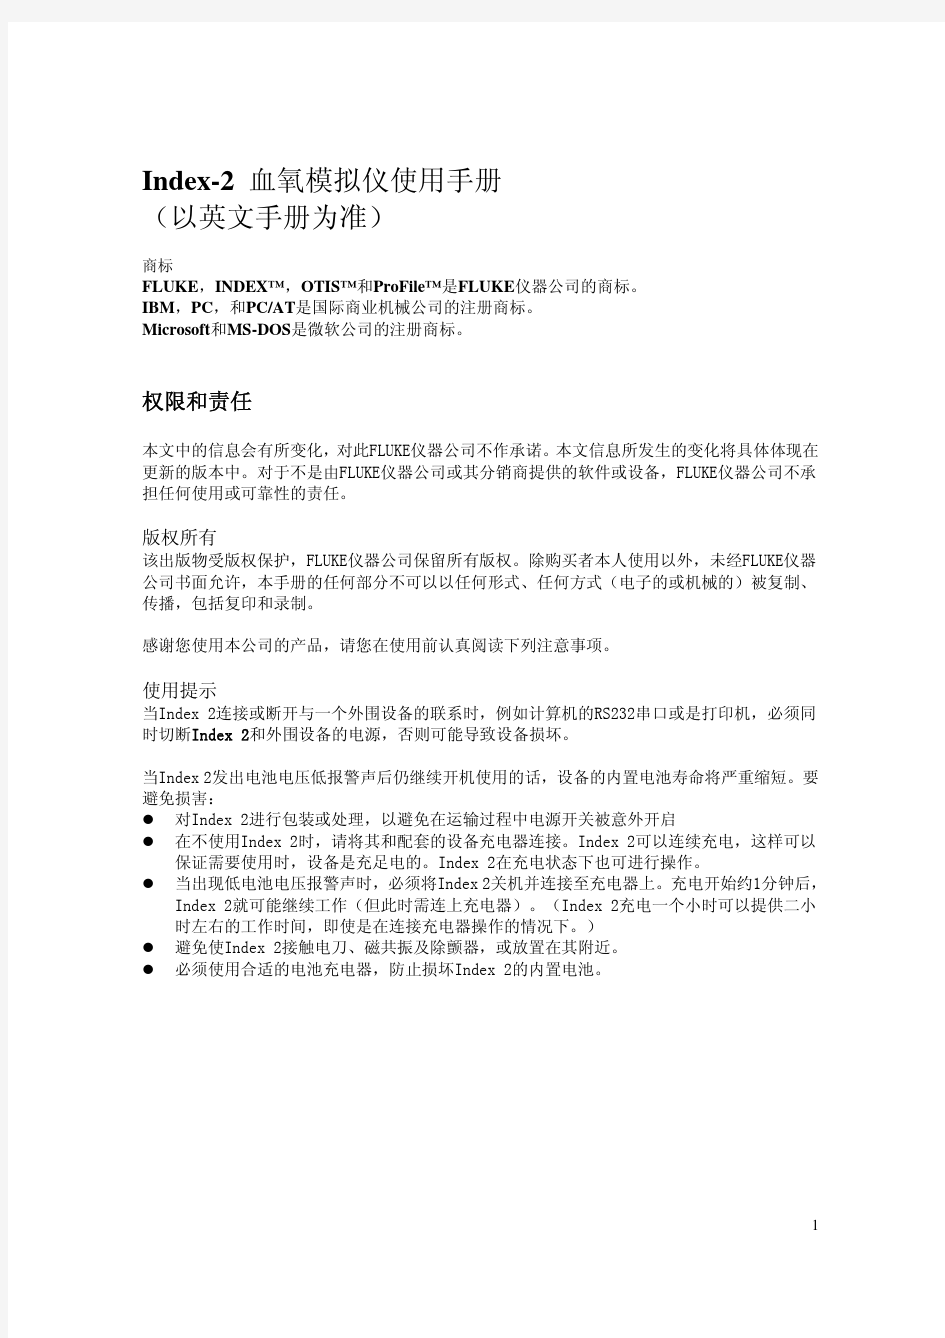 FLUKE index 2 FE 脉冲血氧模拟器 快速使用手册 中文 2012